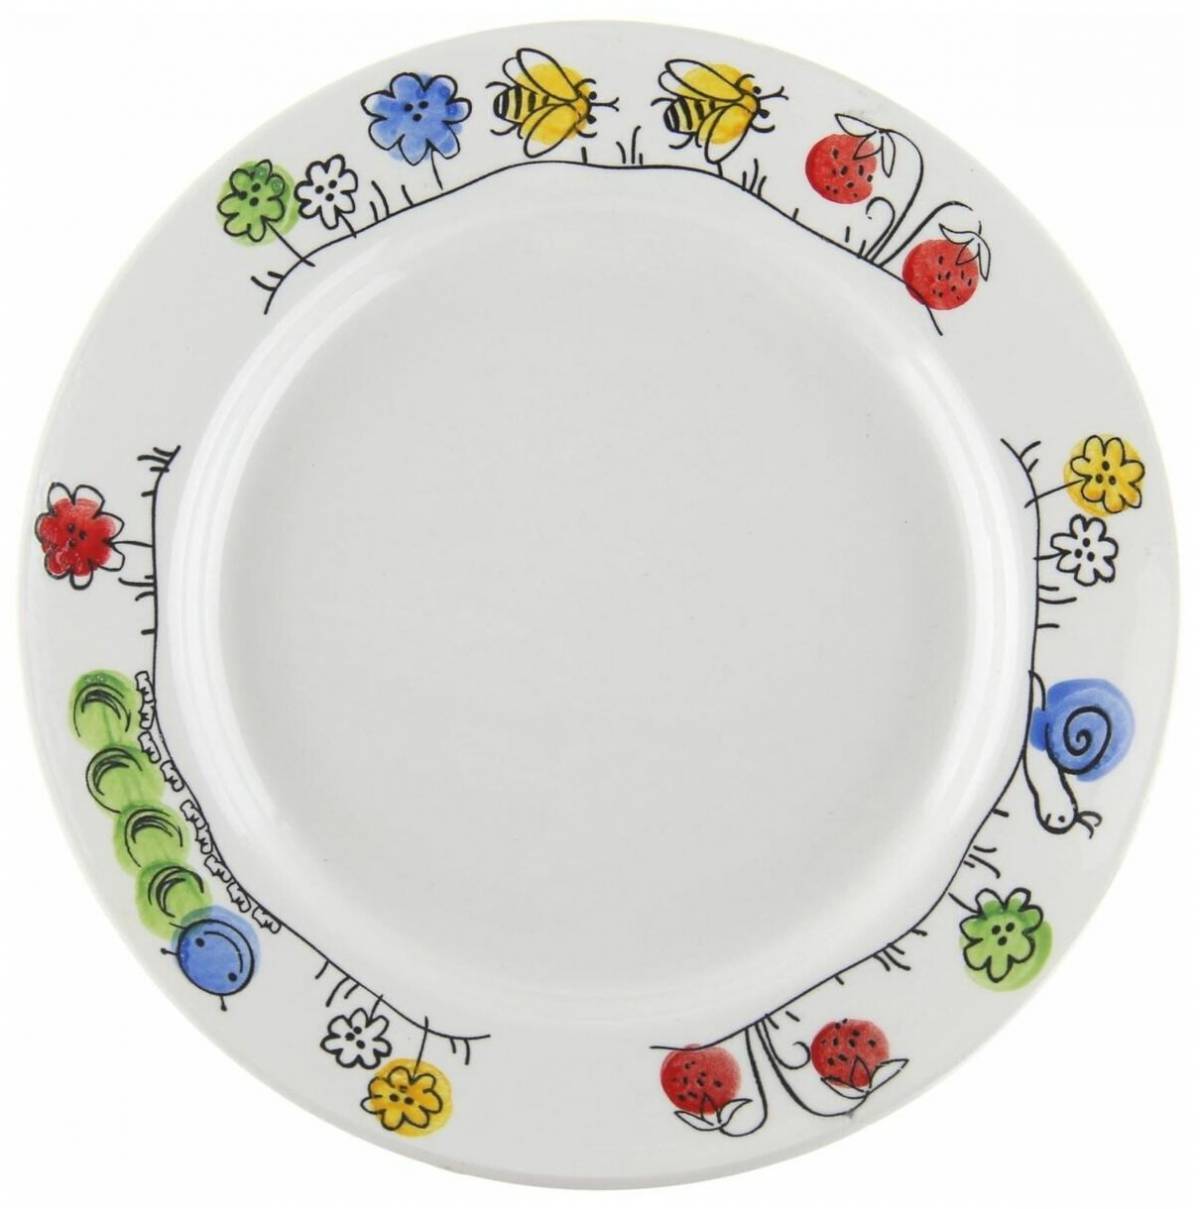 Картинка для детей тарелка #16